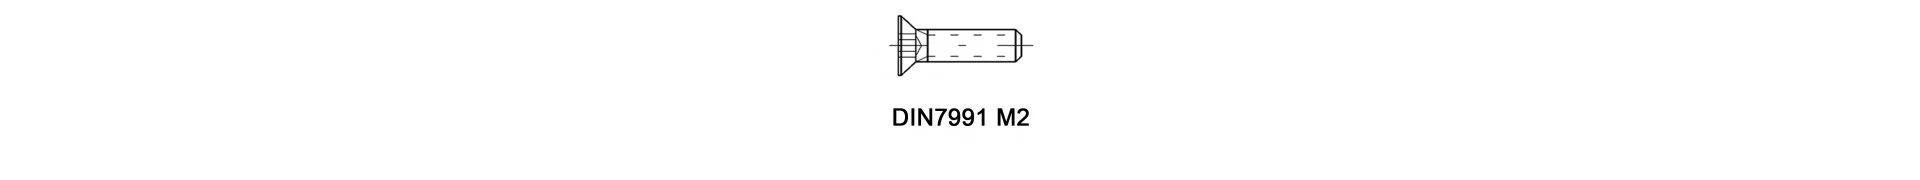 DIN7991 M2